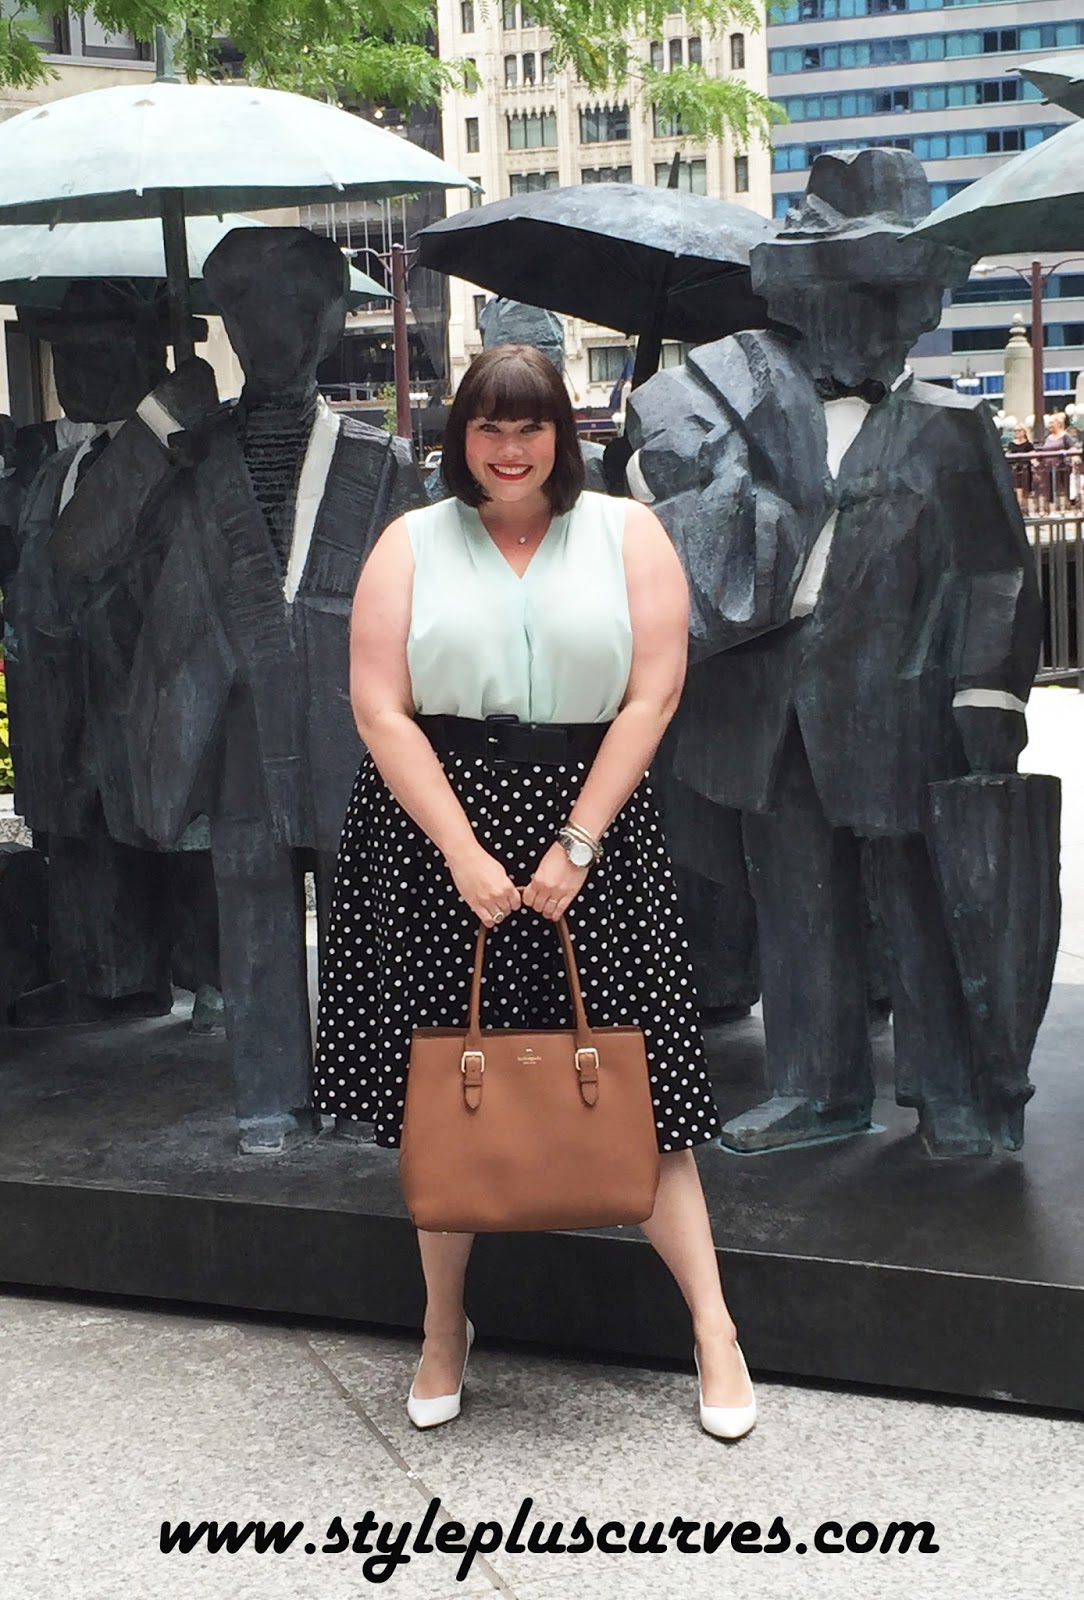 Plus Size OOTD: City Chic Polka Dot Midi Skirt on a Rainy Day